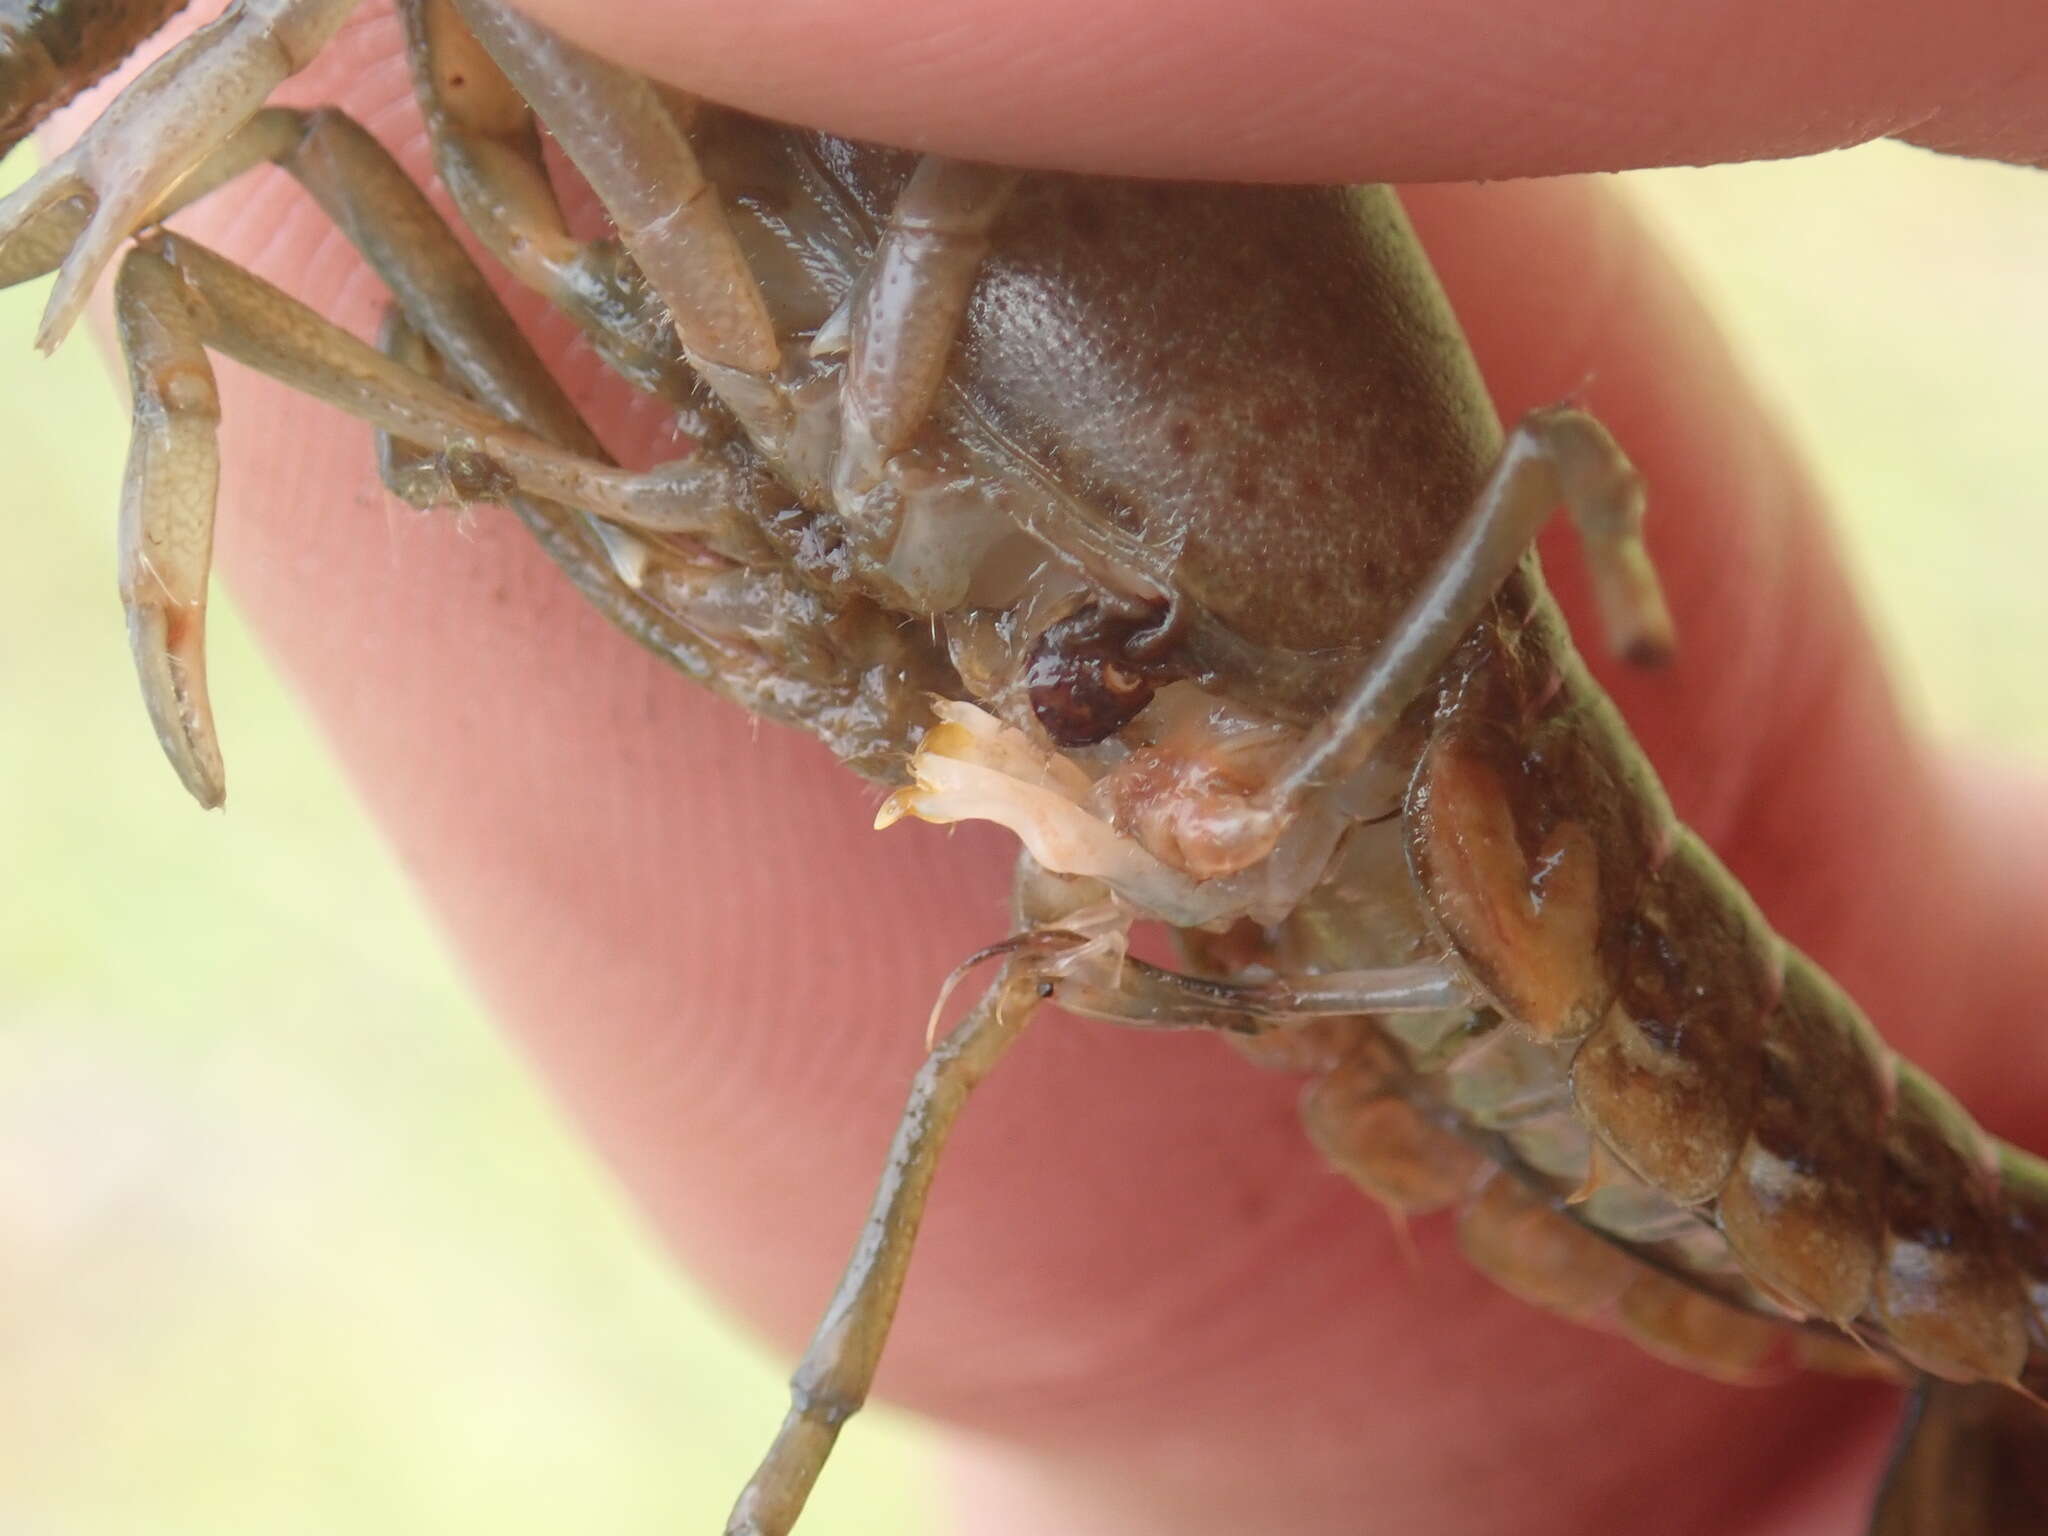 Image of Procambarus apalachicolae Hobbs 1942